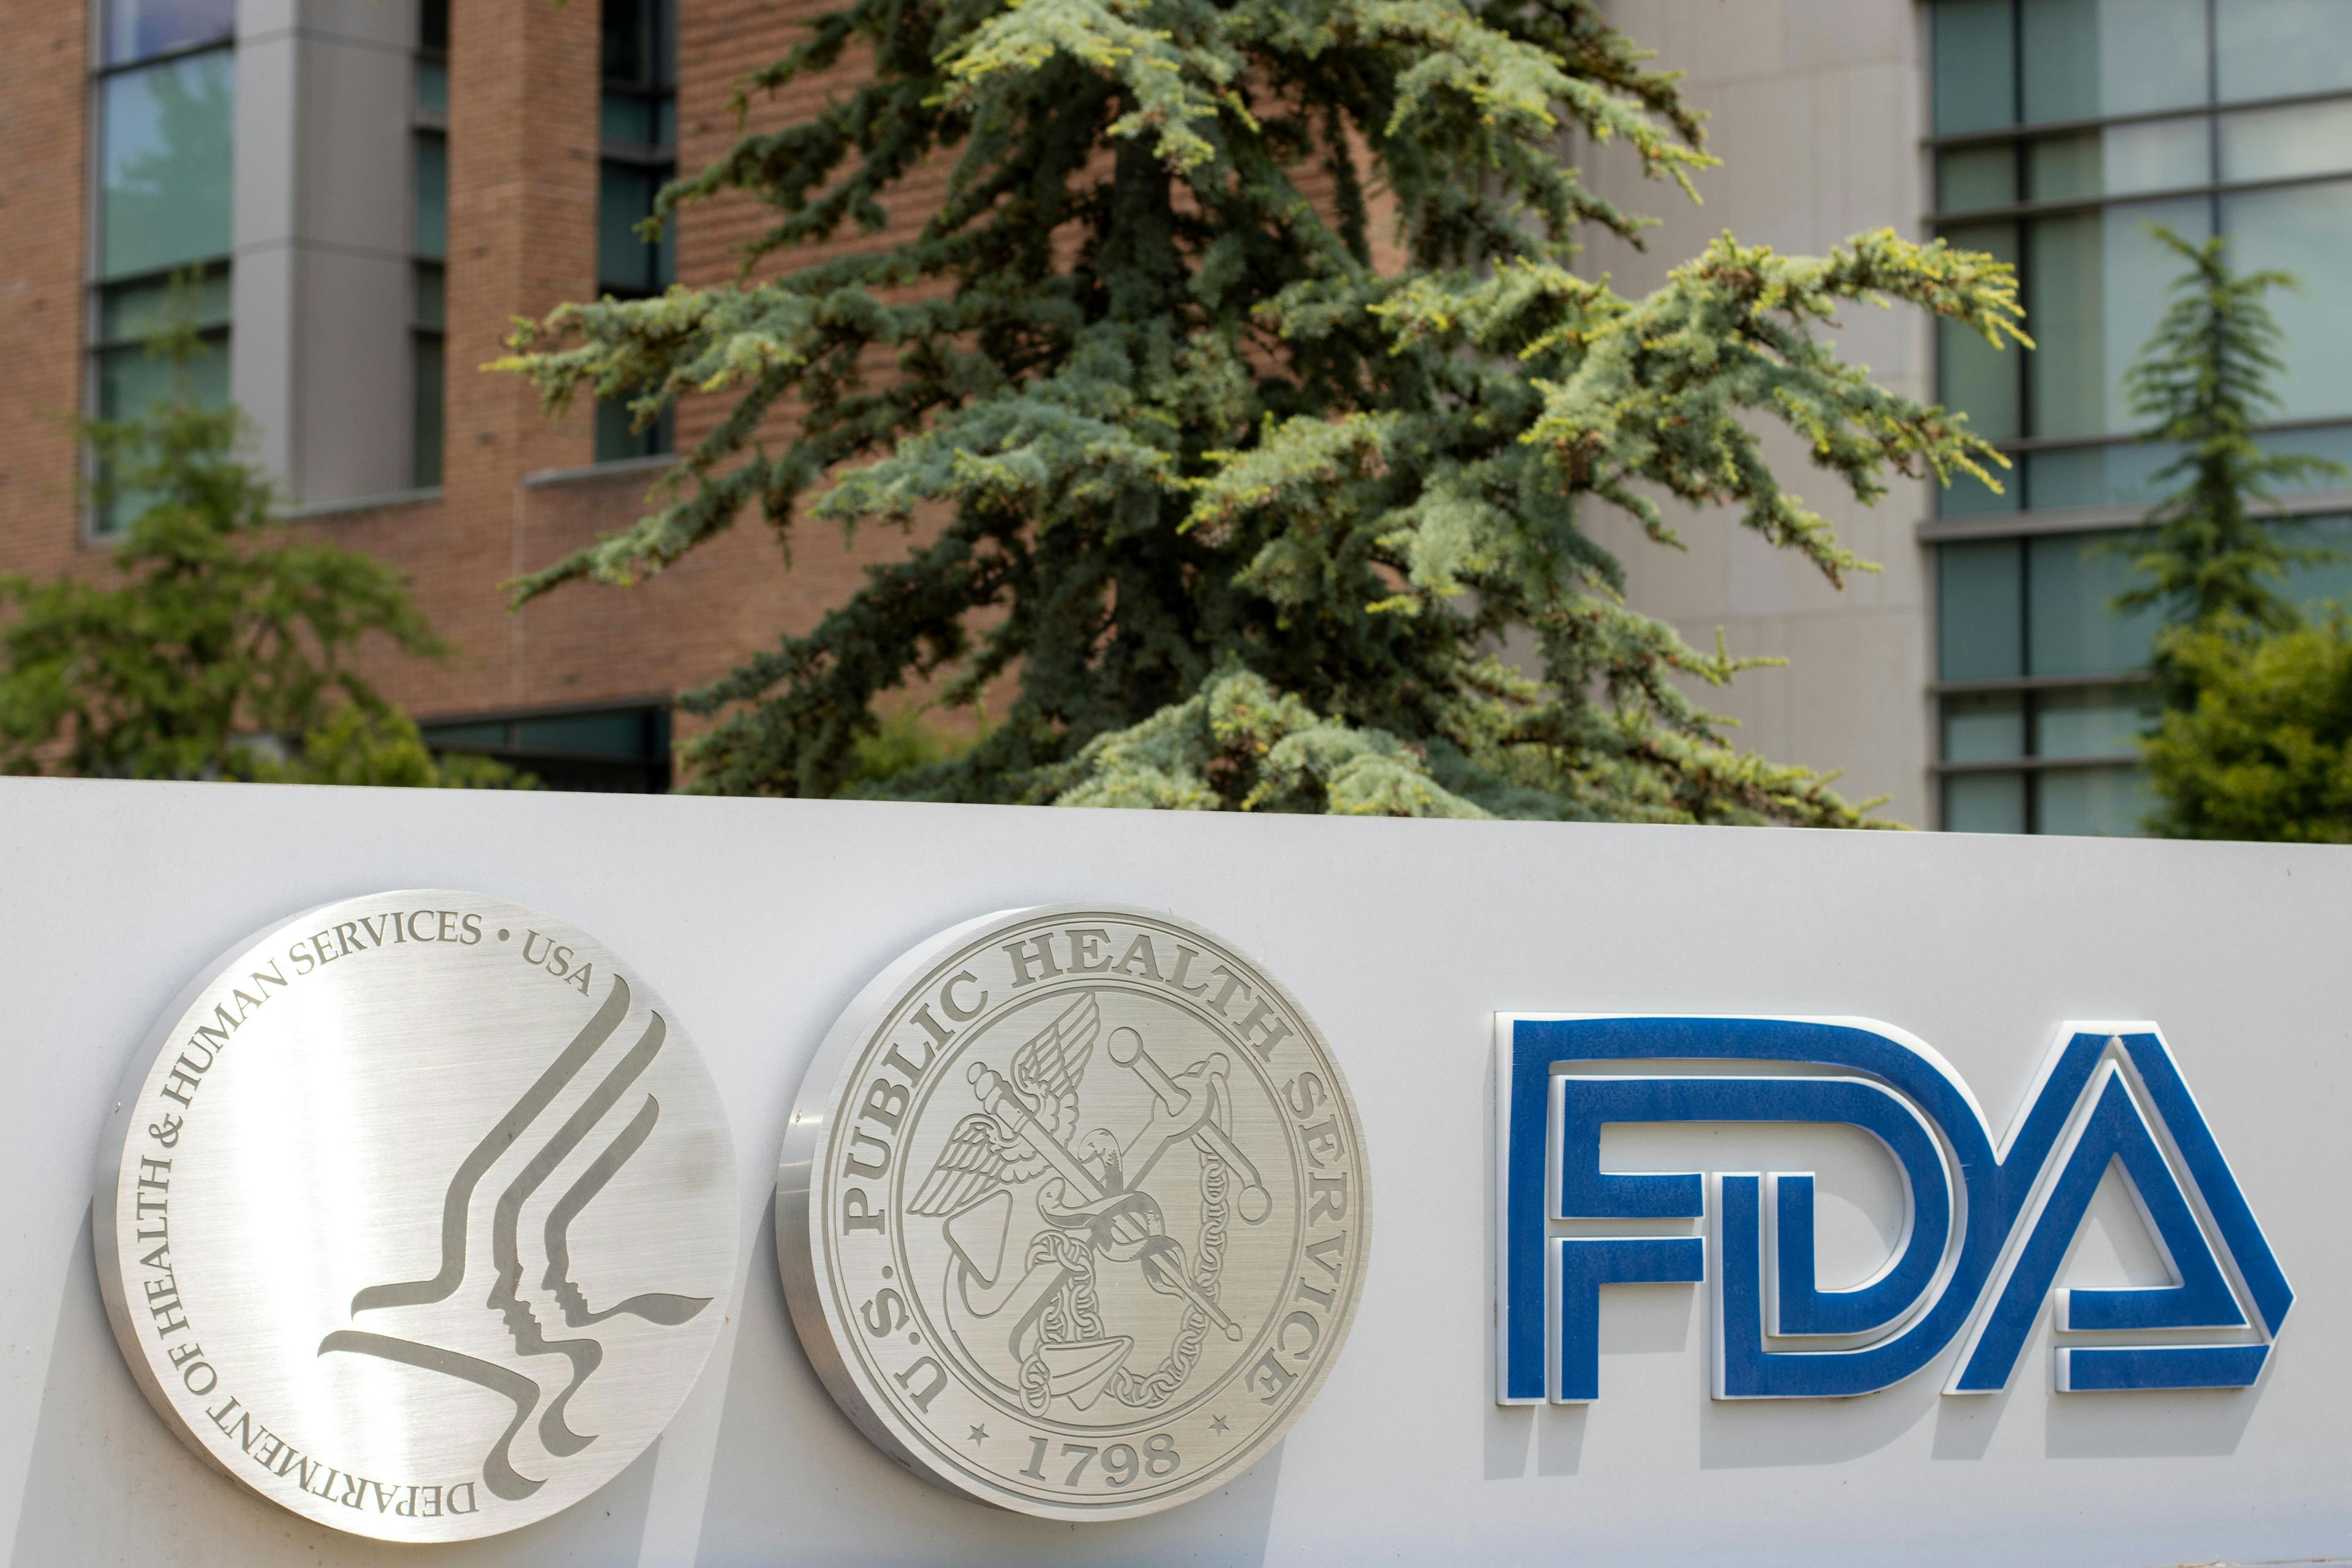 FDA logos as seen at the FDA headquarters / Tada Images - stock.adobe.com